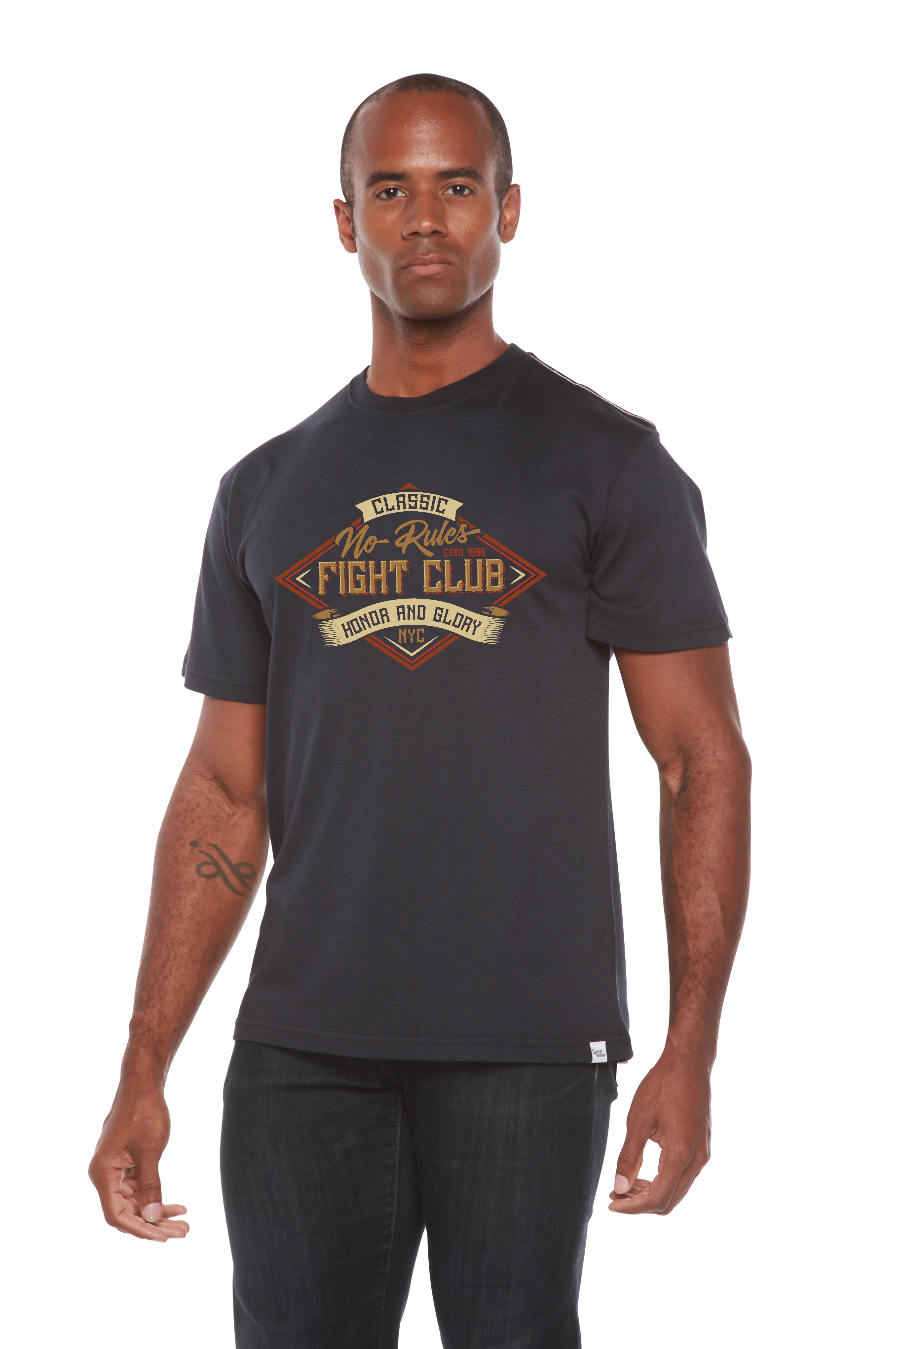 Fight Club Men's Bamboo Viscose/Organic Cotton Short Sleeve T-Shirt - Spun Bamboo